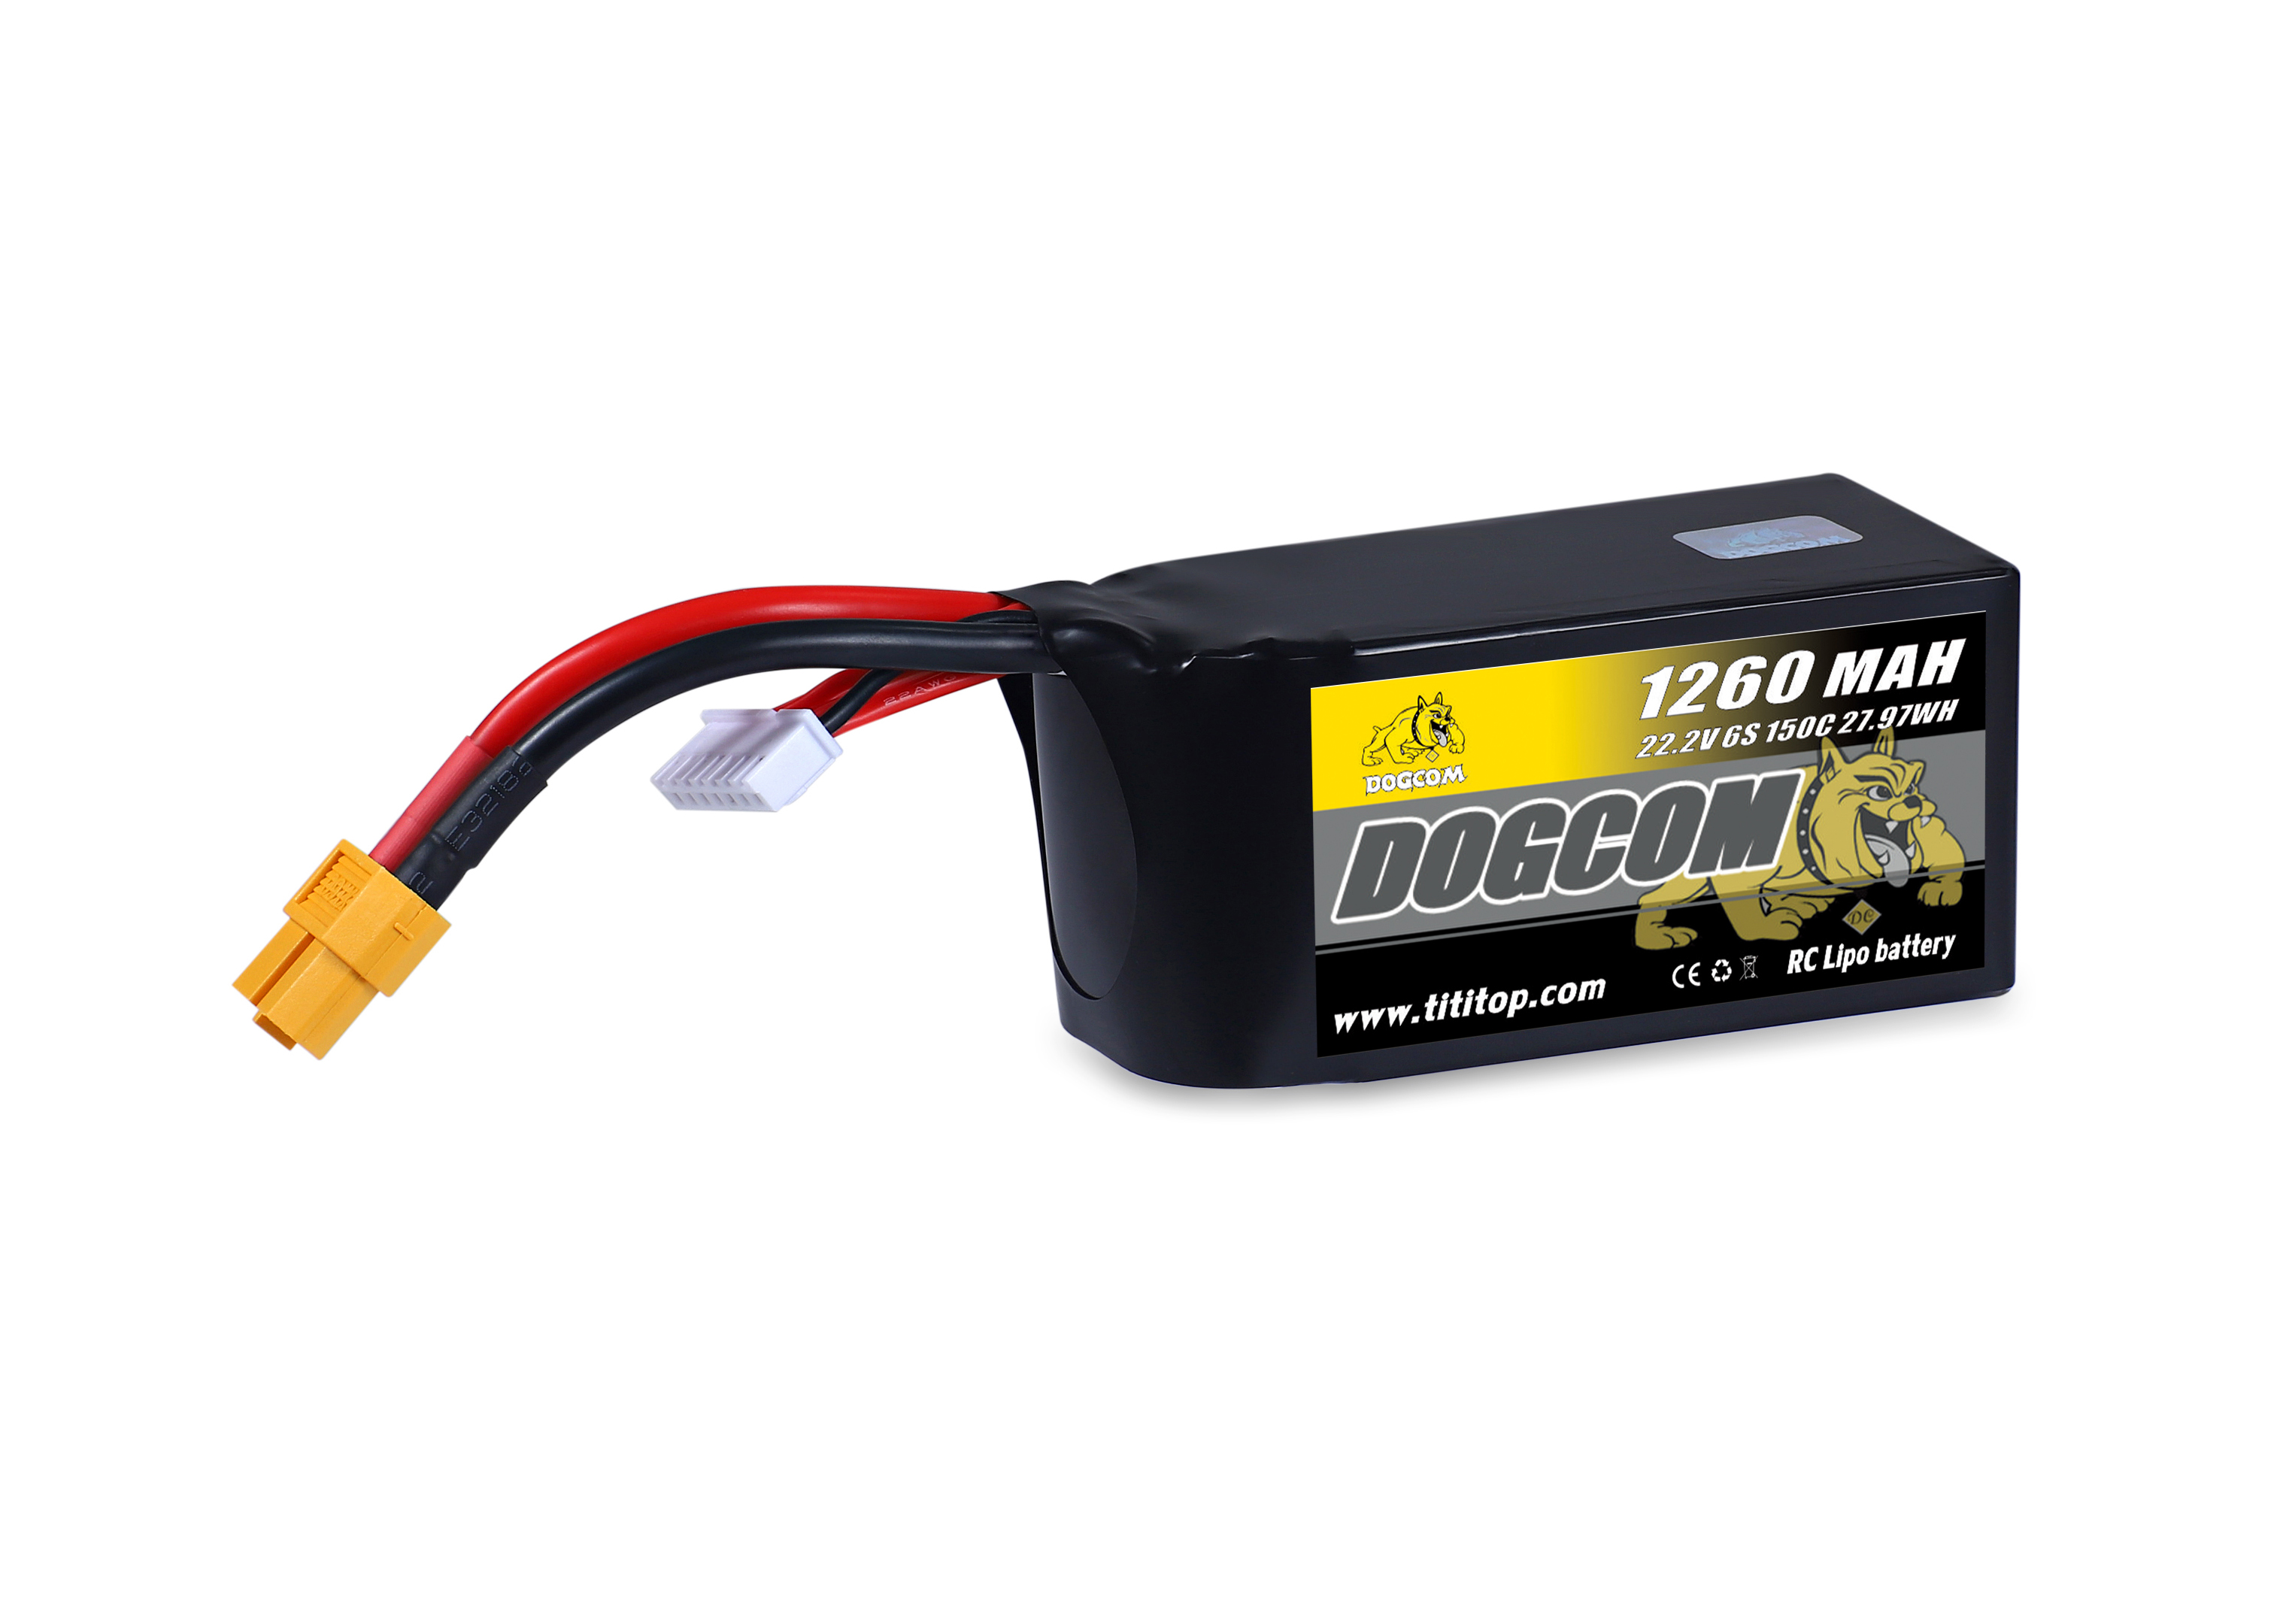 DOGCOM 1260mAh 6S 22.2V 150C lipo battery